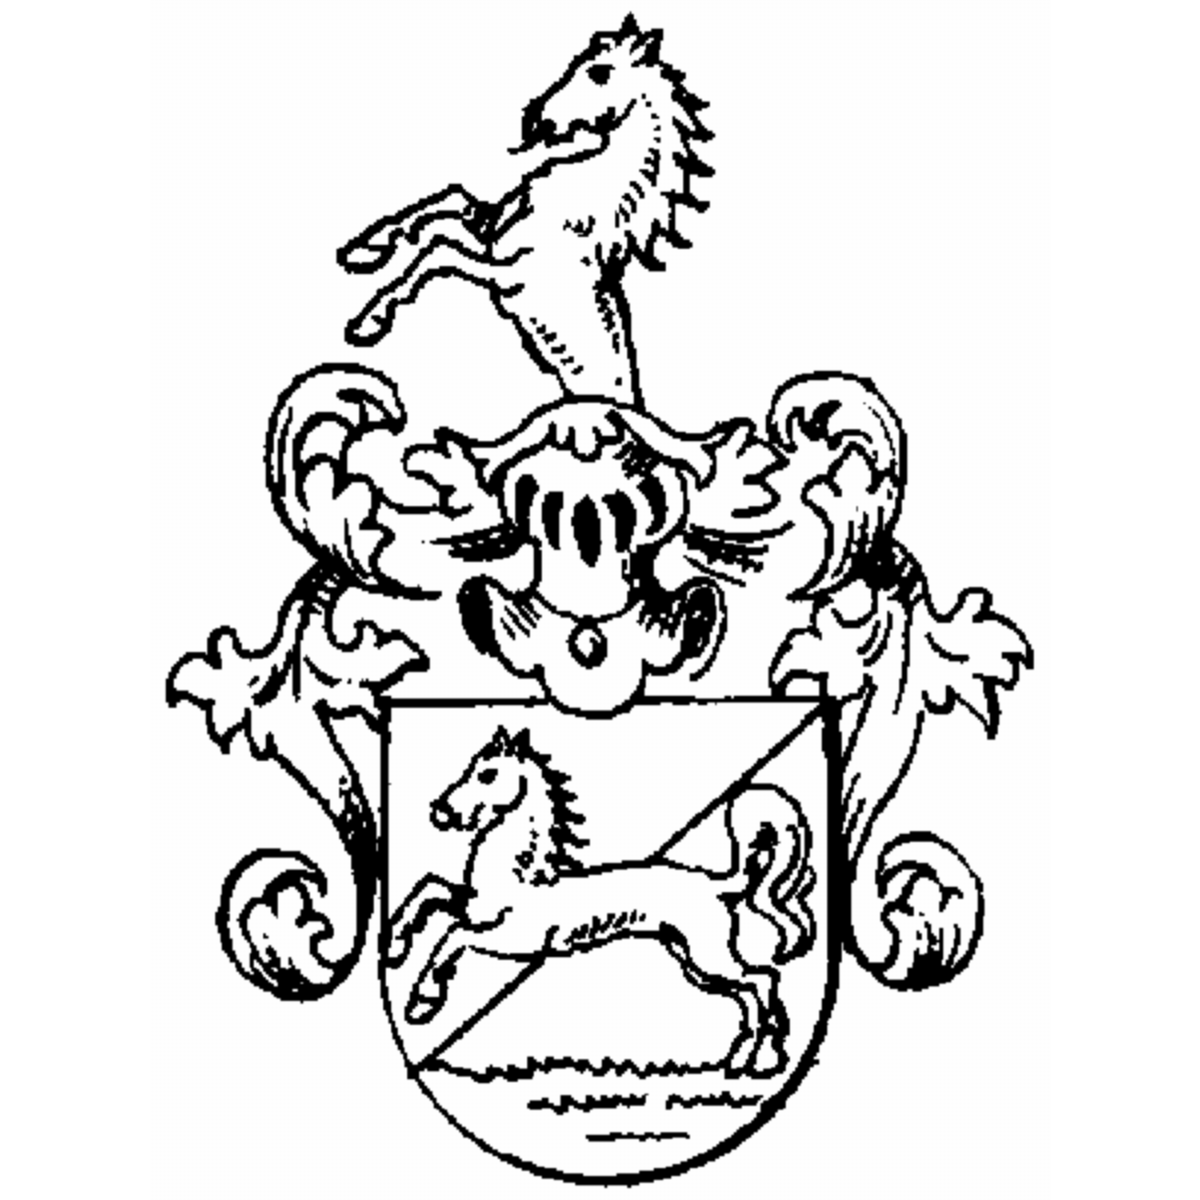 Wappen der Familie Nicasius